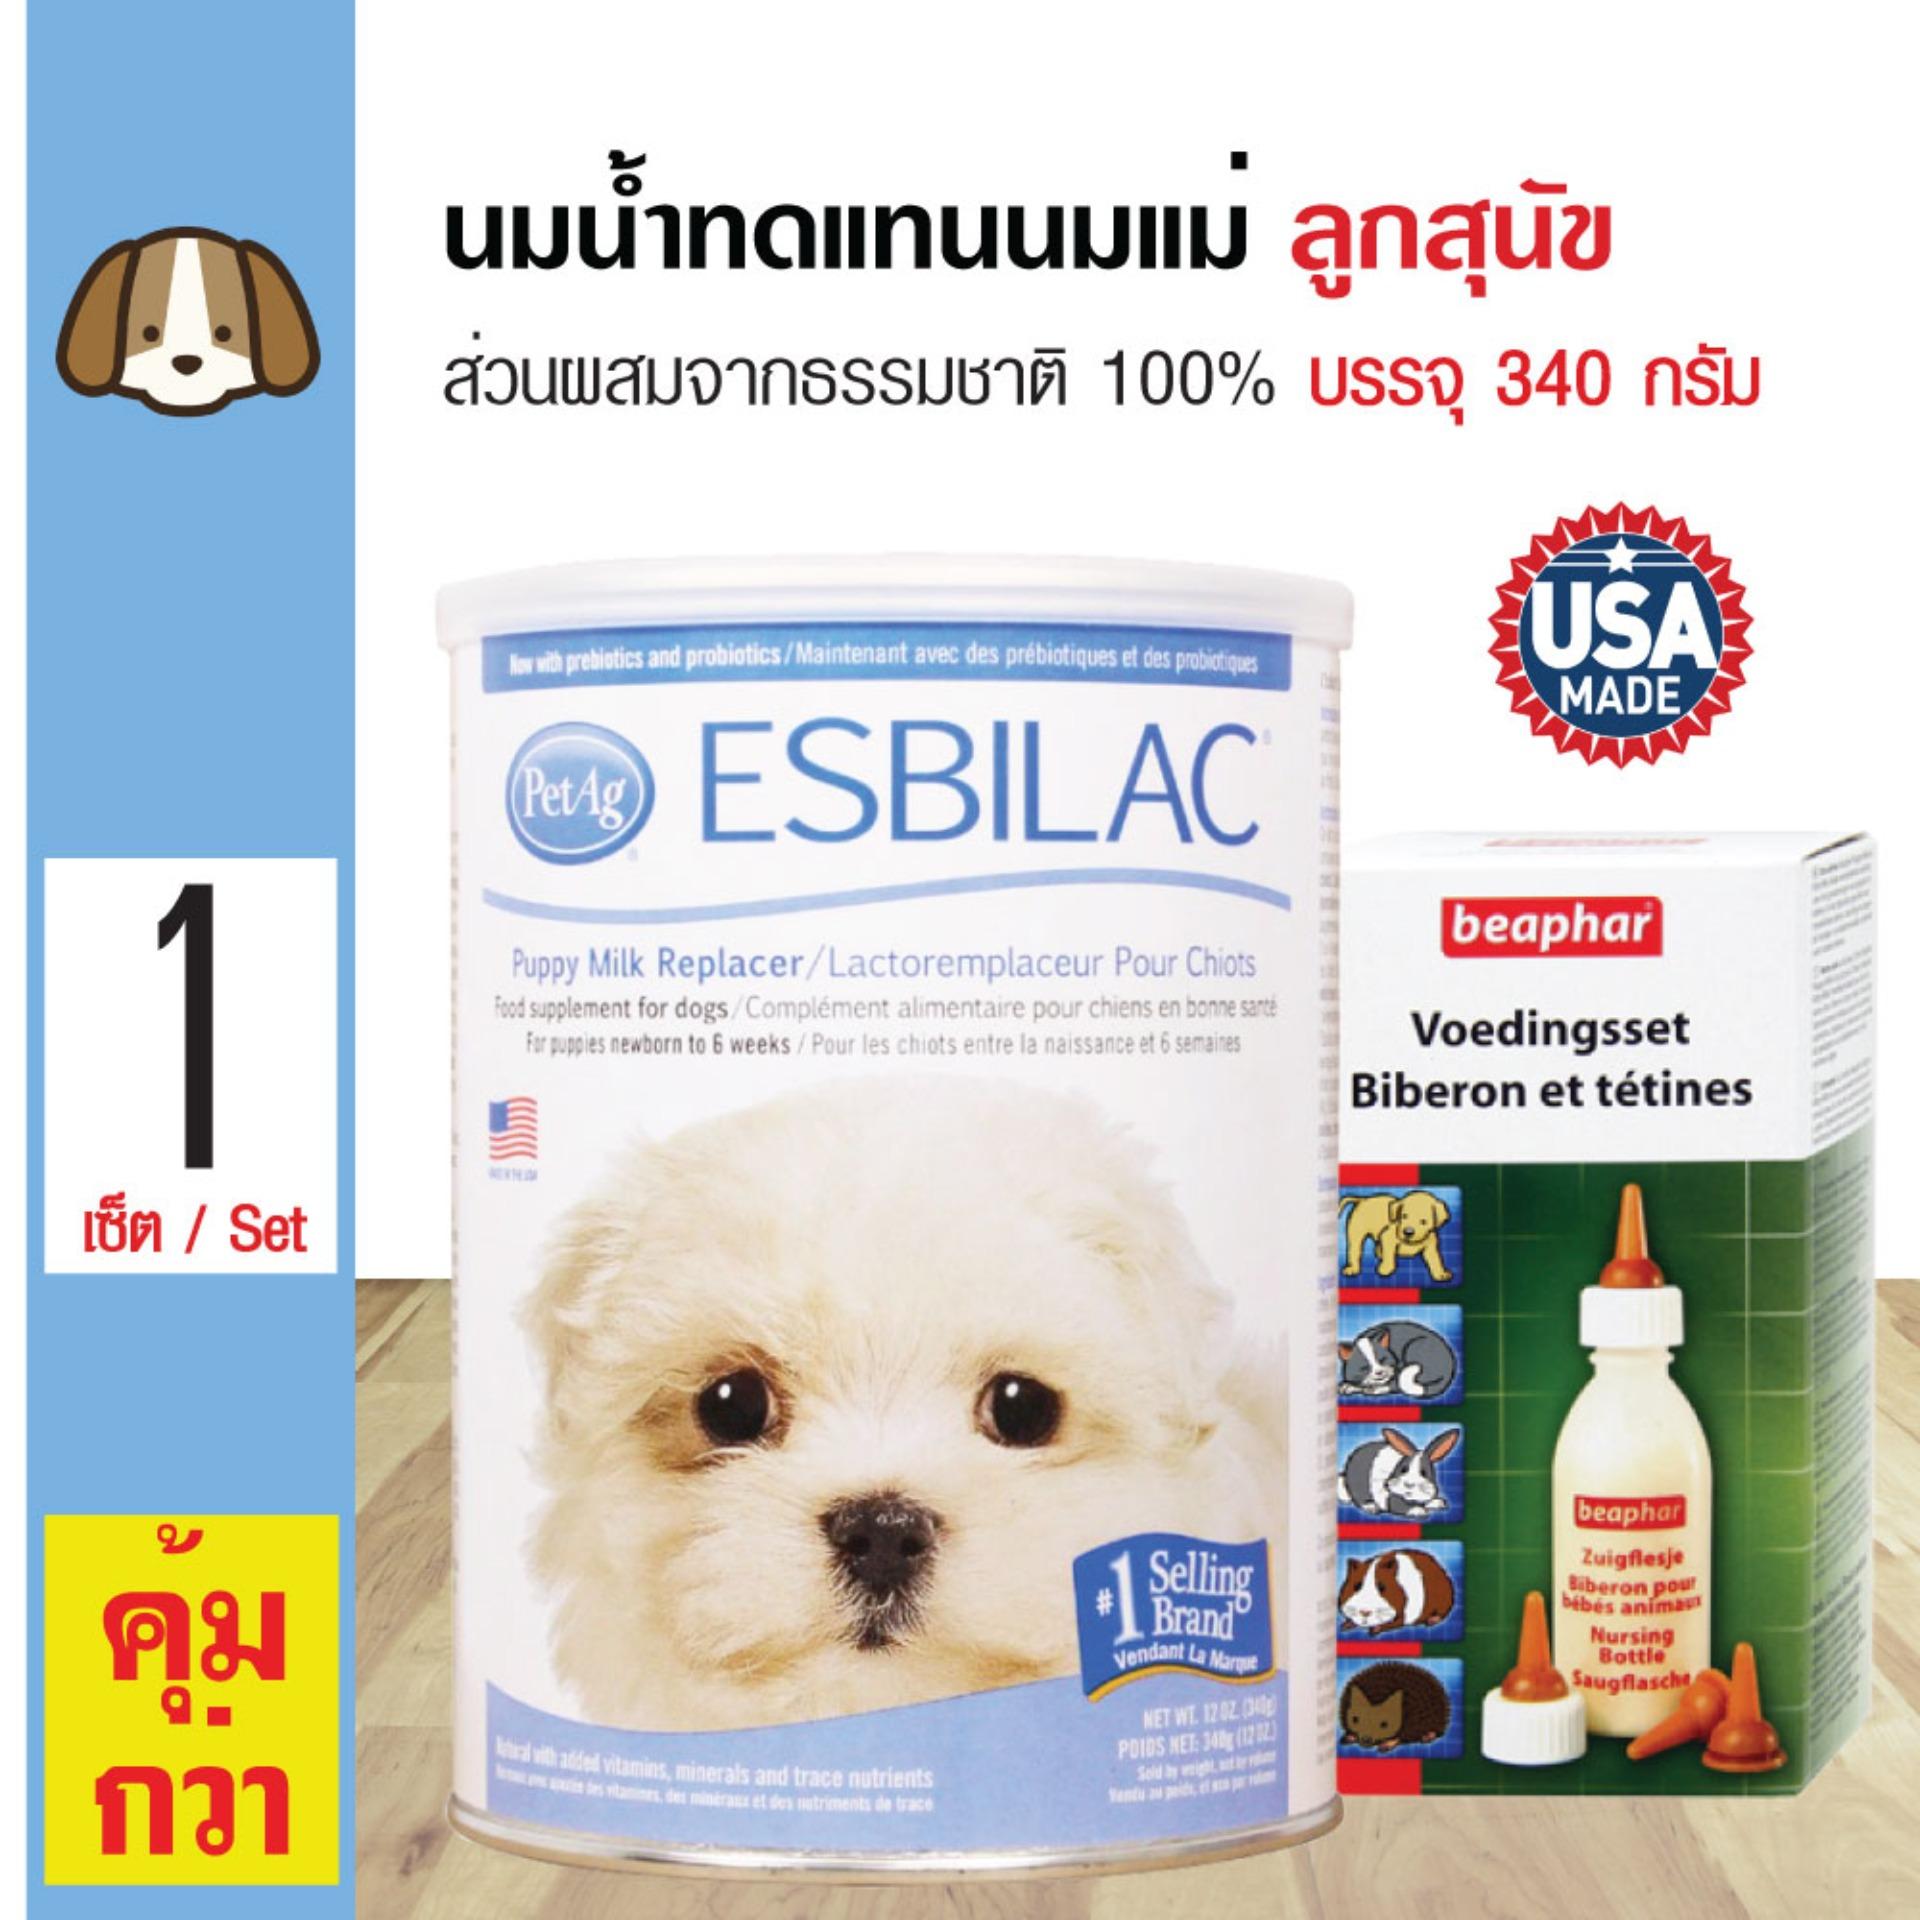 Esbilac นมผงชง นมทดแทนอาหาร สำหรับลูกสุนัขและแม่สุนัข ลูกสุนัขอายุไม่เกิน 6 เดือน (340 มล./กระป๋อง) + Beaphar ขวดนมพลาสติก พร้อมจุกยางพารา 2 ชิ้น ความจุ 35 มล.